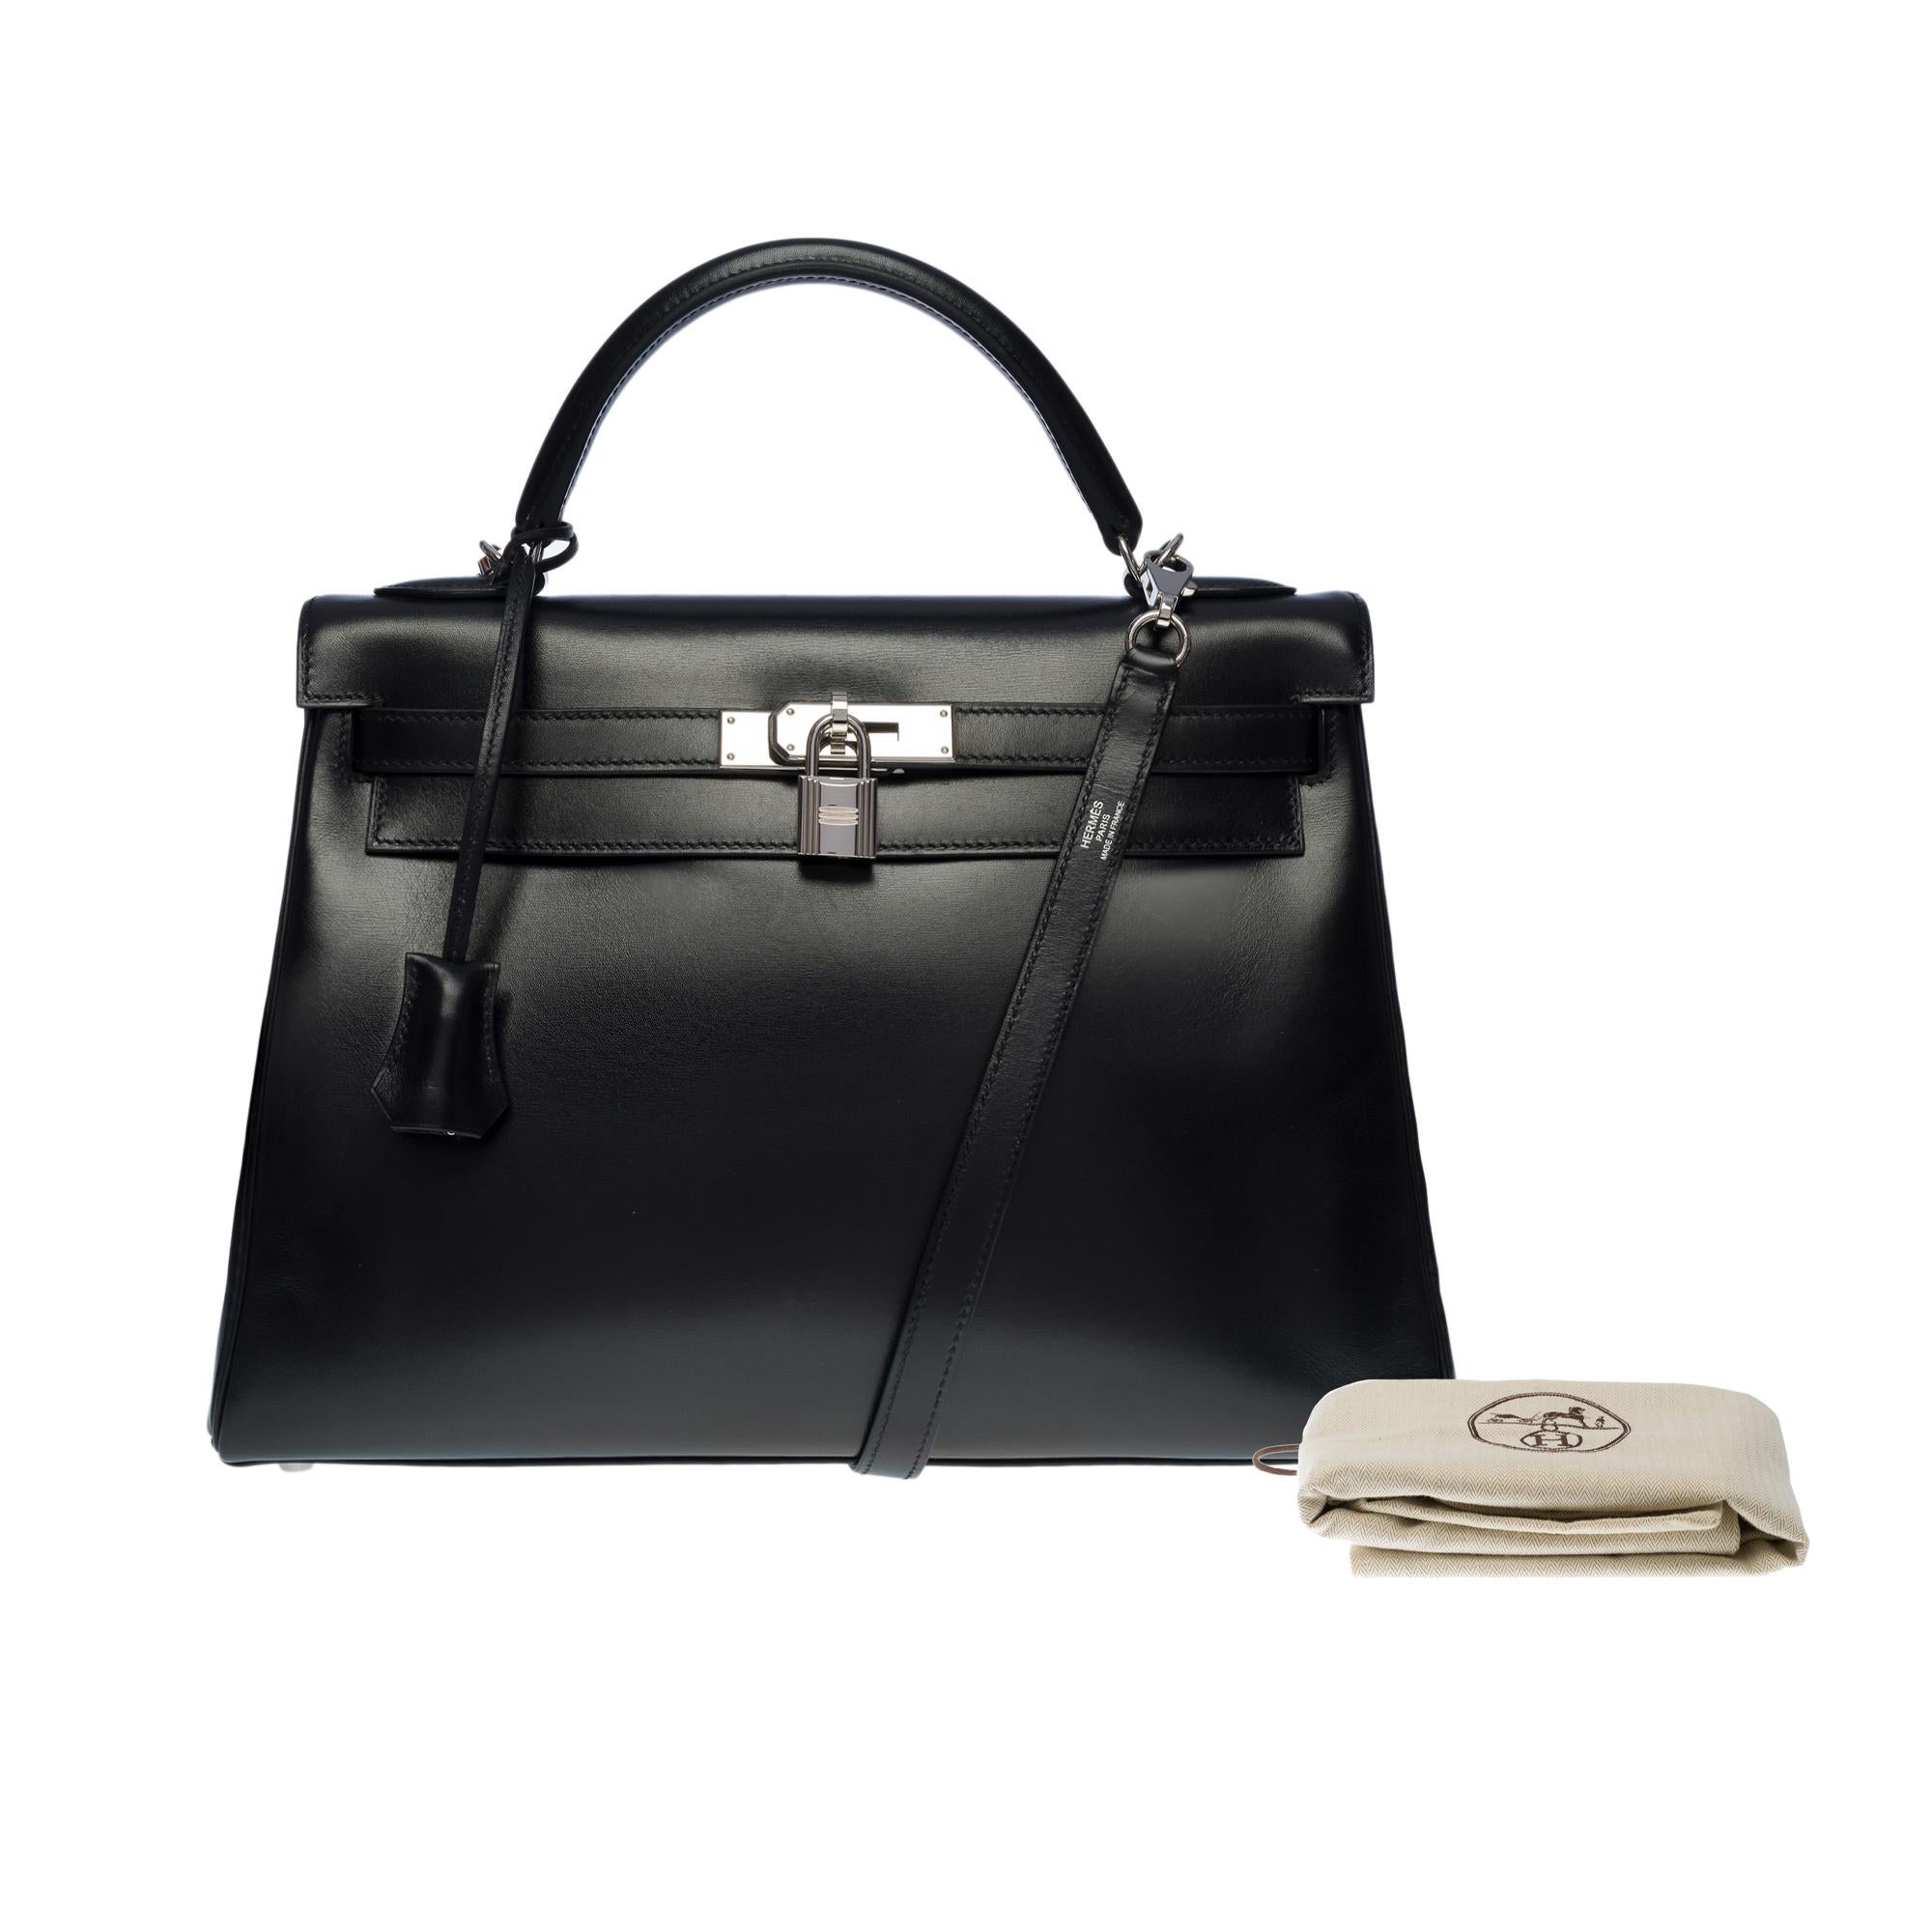 Rare Hermès Kelly 32 retourne handbag strap in black box calf leather, SHW 7